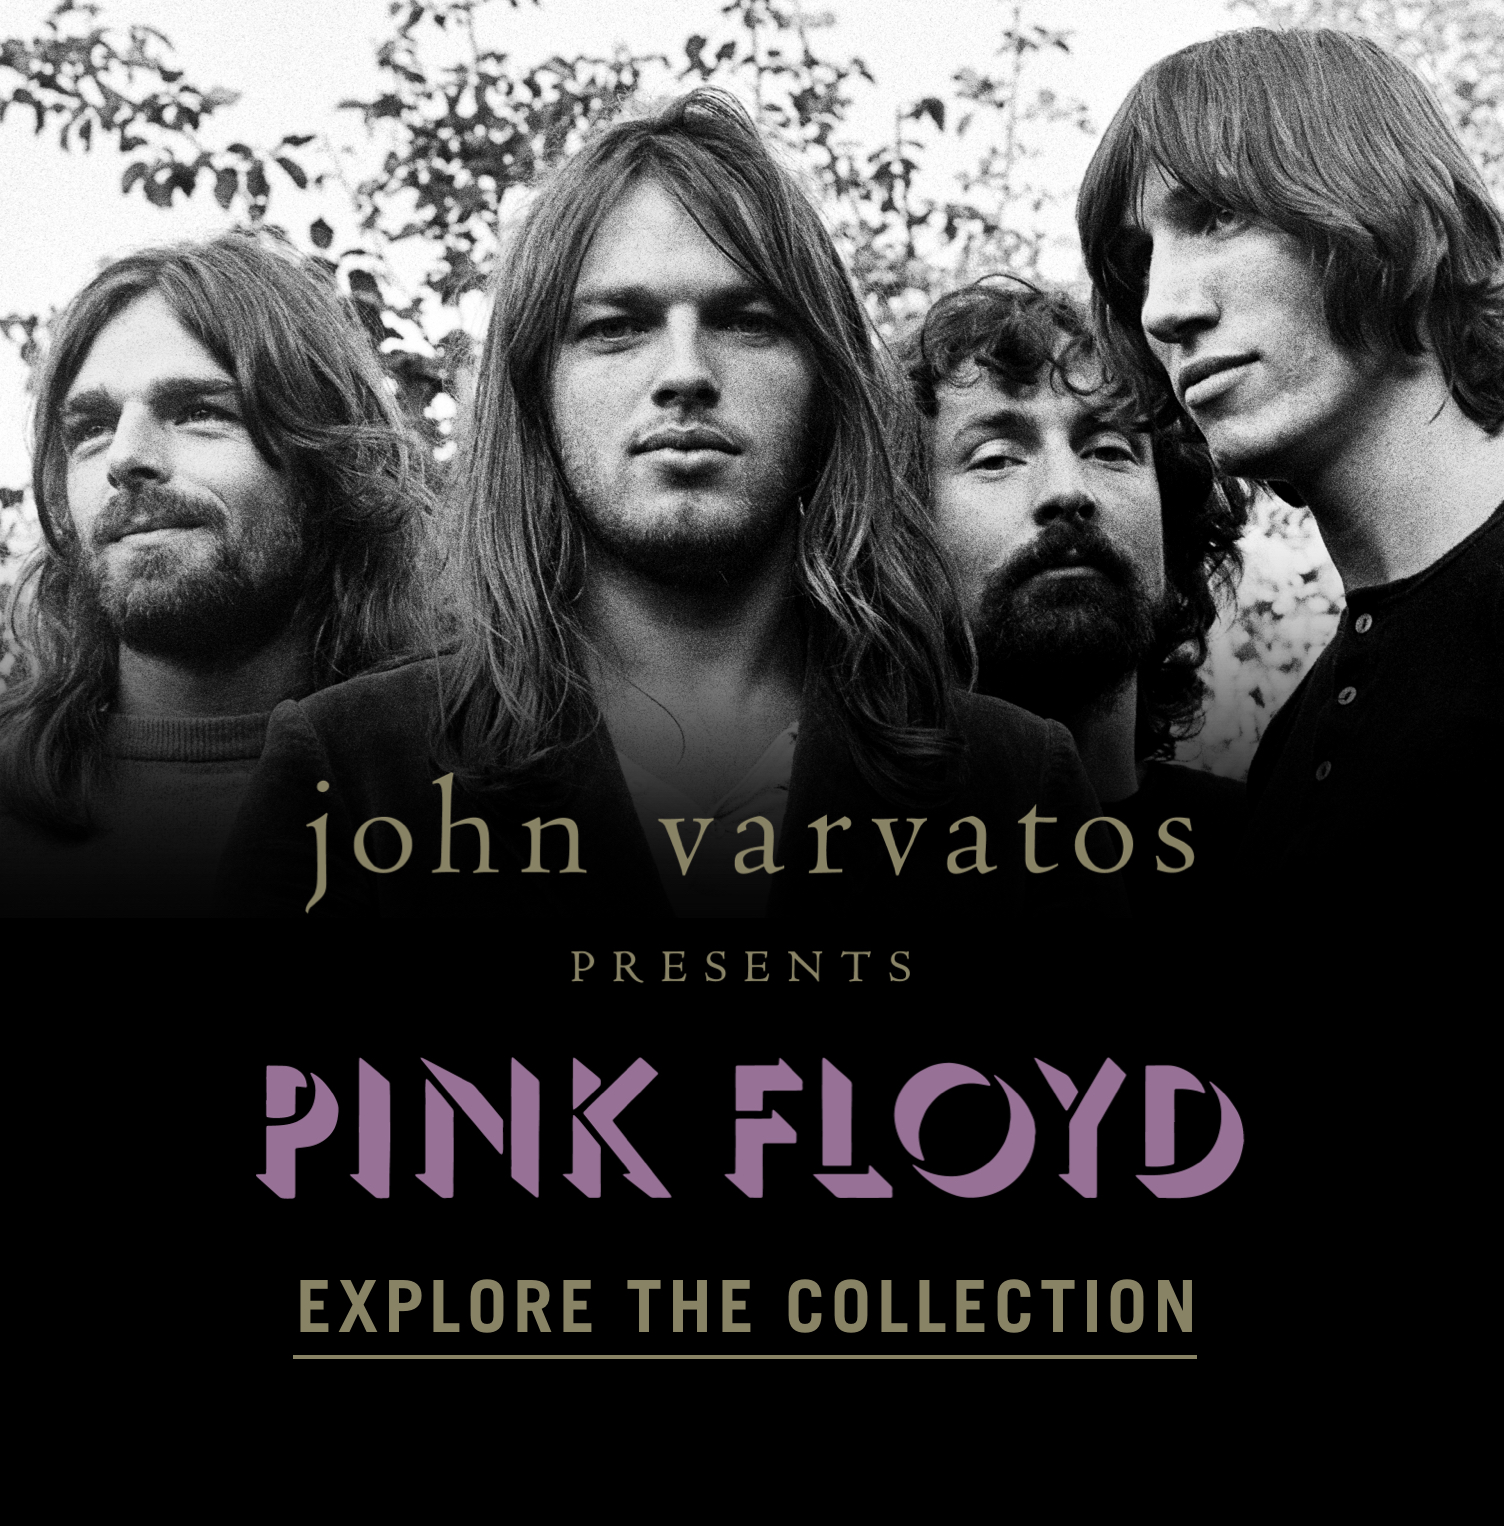 Limited Edition Pink Floyd